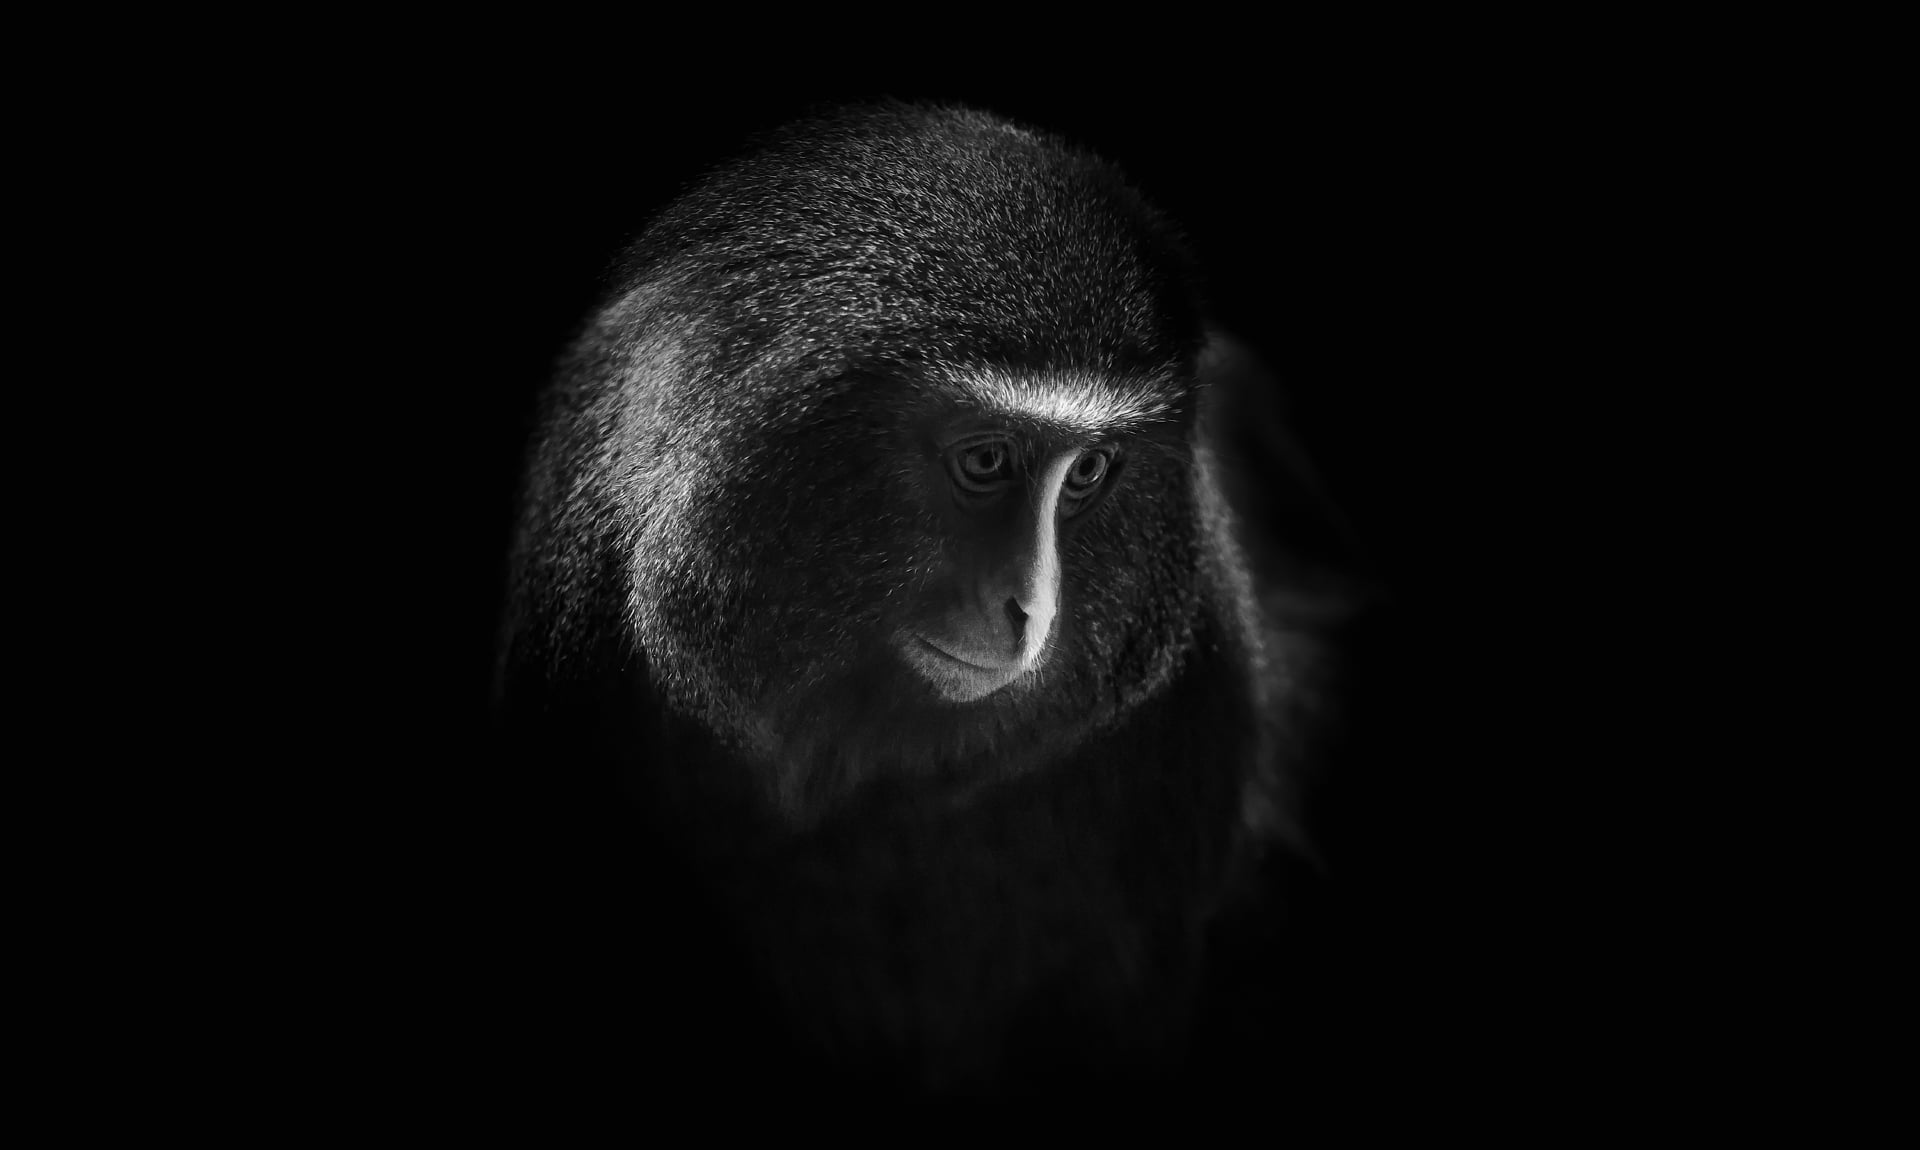 Hamlyns monkey at 1024 x 1024 iPad size wallpapers HD quality